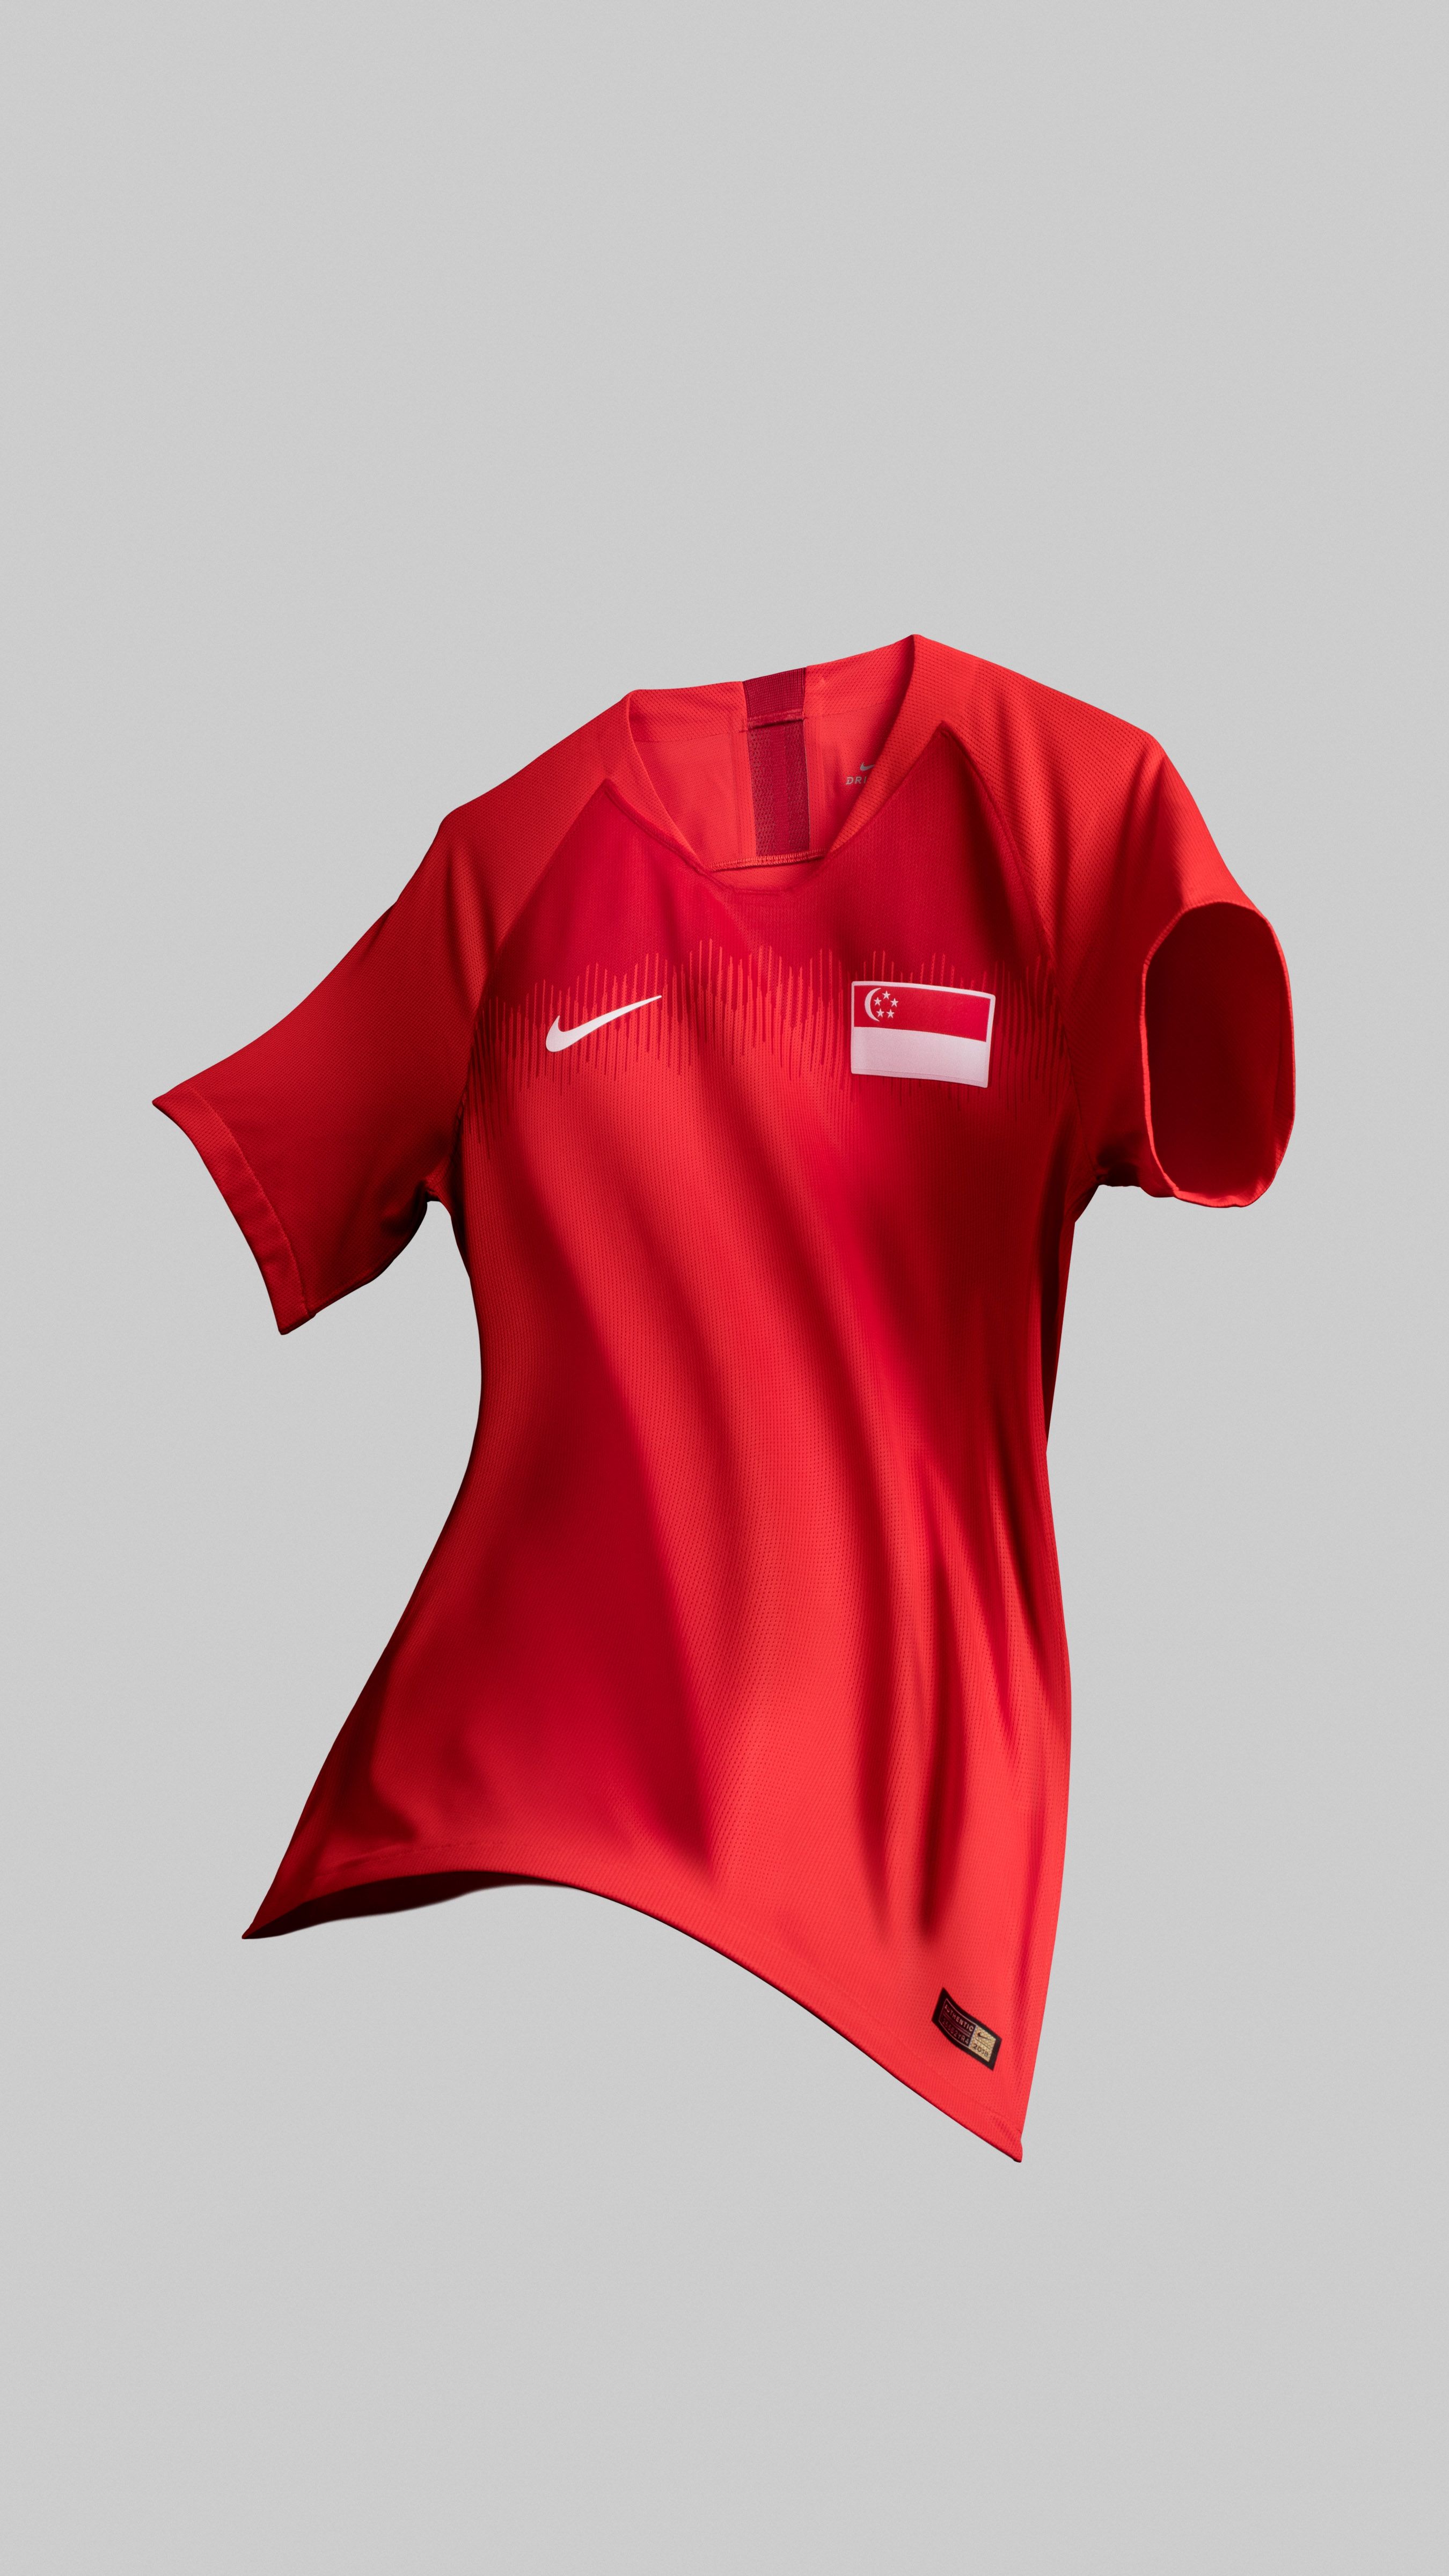 Nike Singapore jersey home